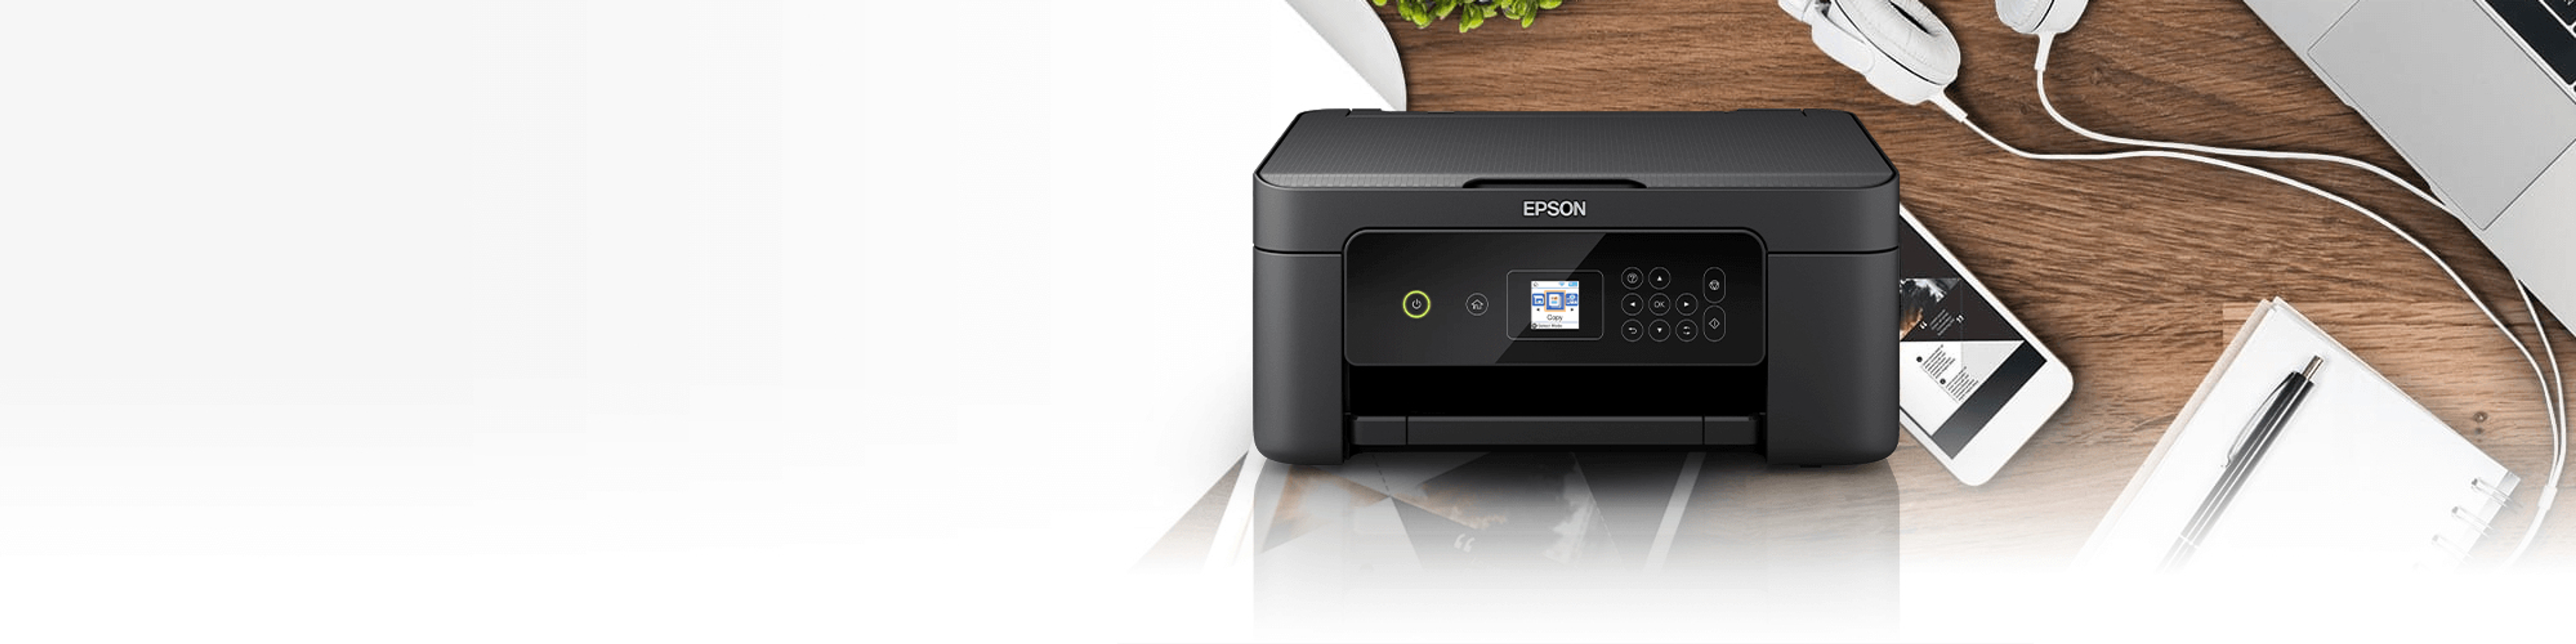 EPSON Tintenstrahl Multifunktionsdrucker WLAN XP-3105